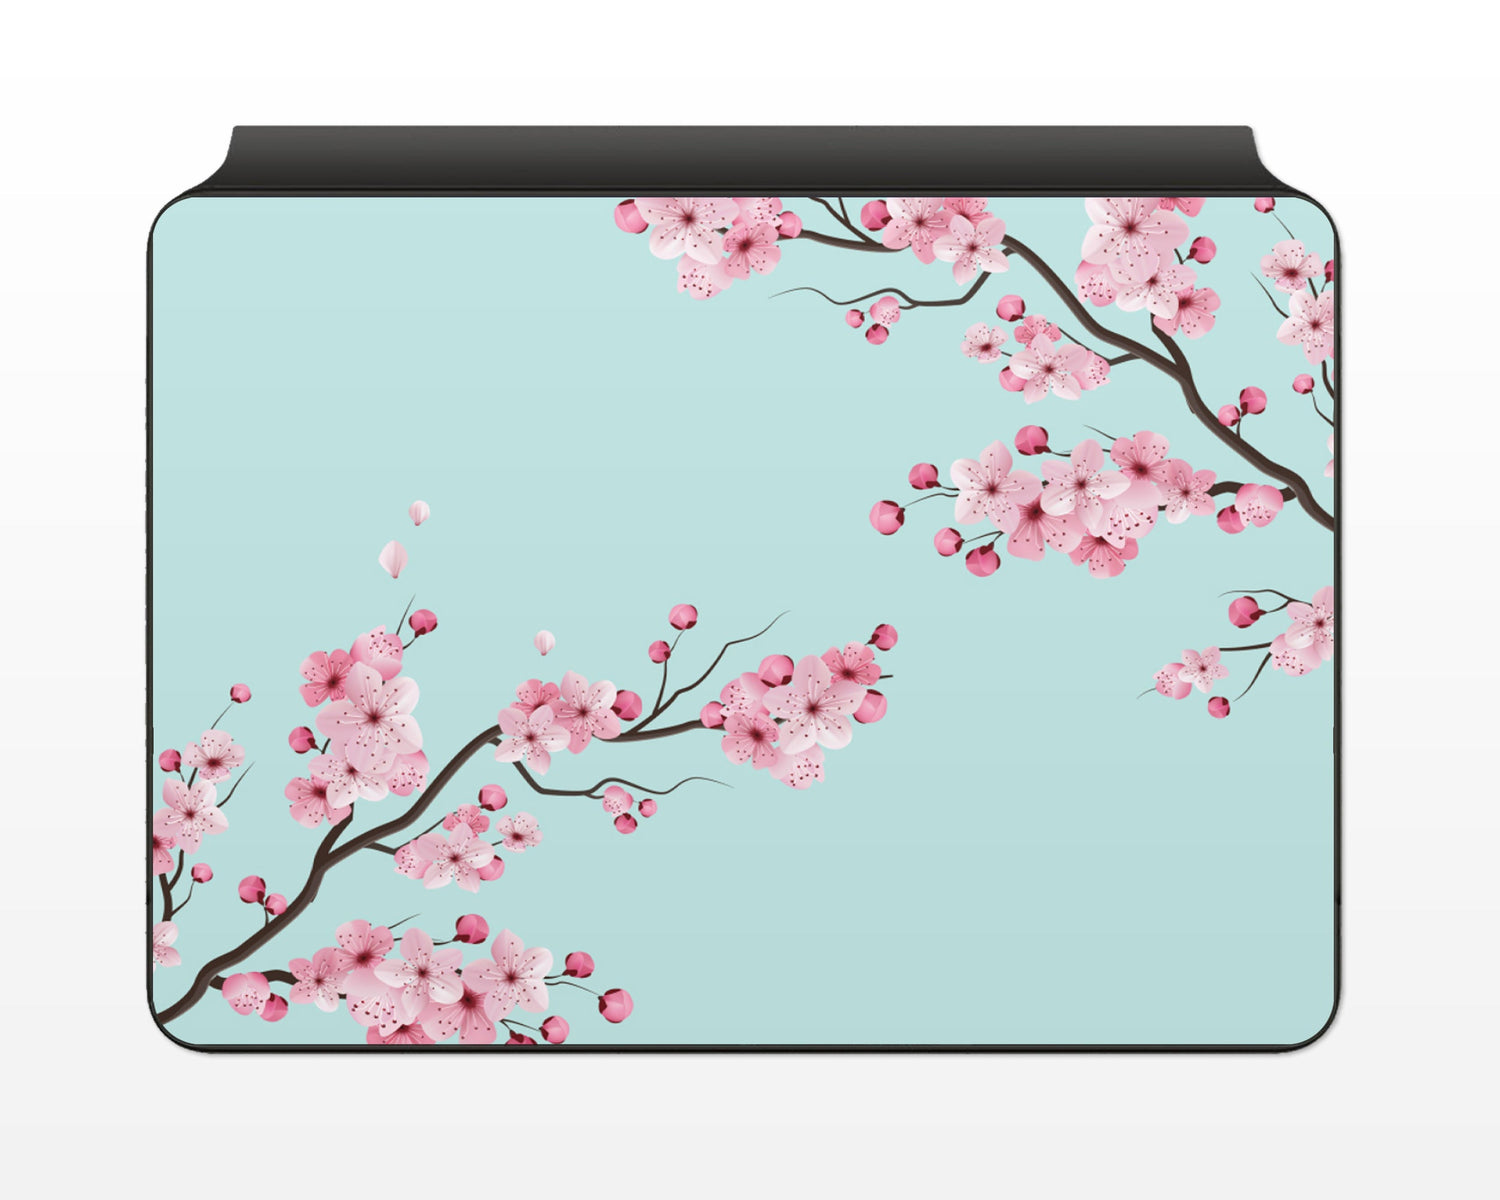 Lux Skins Magic Keyboard Cherry Blossom Teal Mint iPad Air Skins - Art Floral Skin